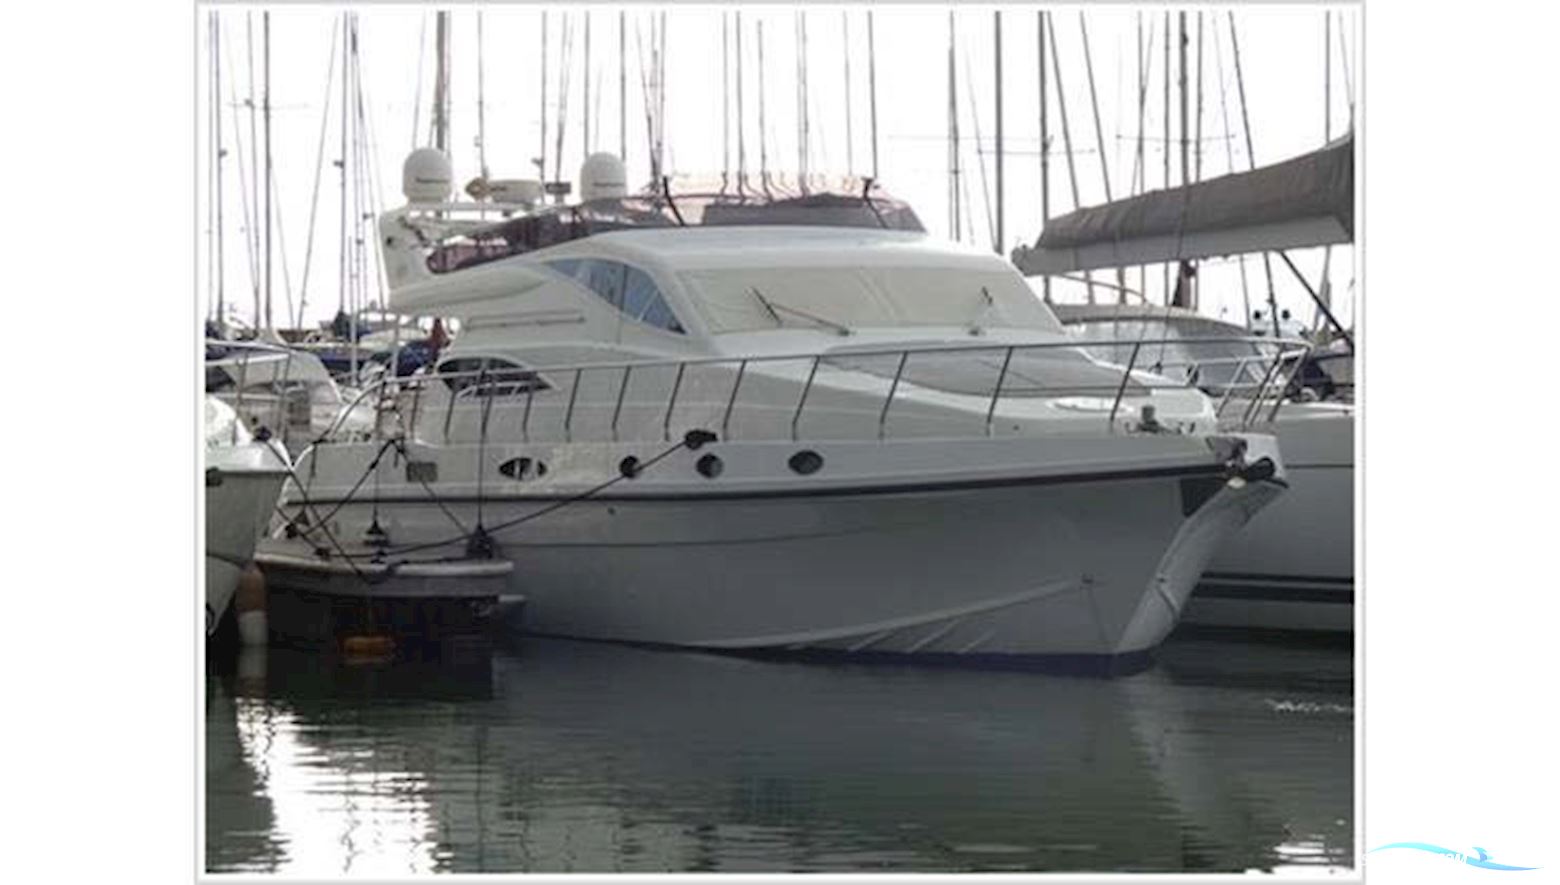 Dellapasqua 18 Fly Motor boat 2008, with Caterpillar C18 engine, Italy